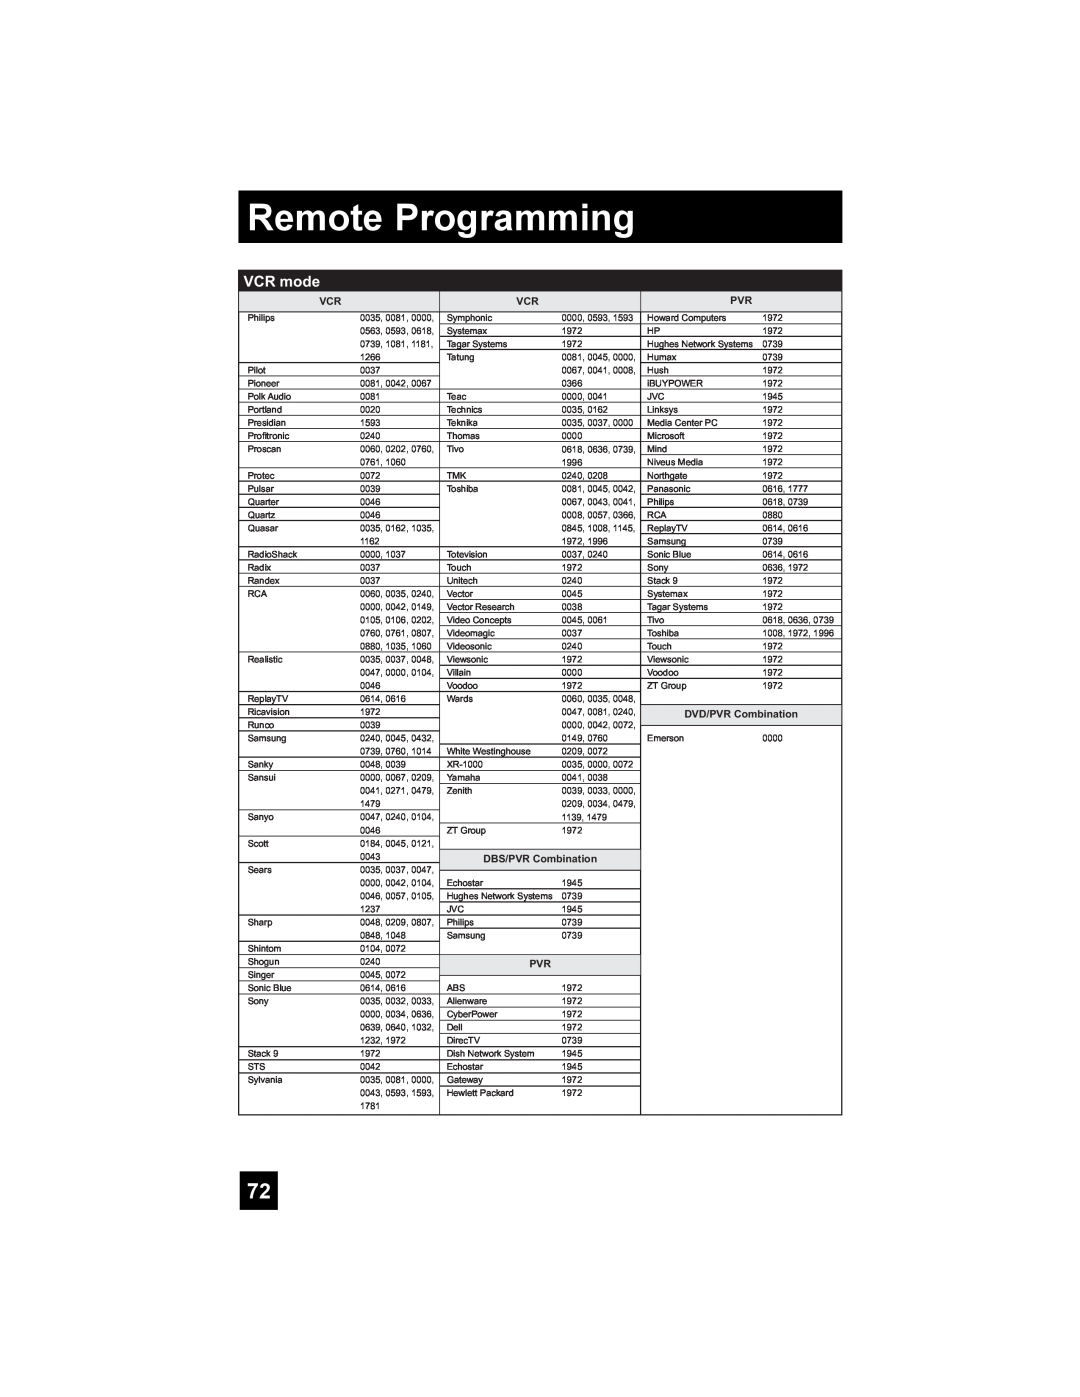 JVC LT-42X898, LT-37X898 manual Remote Programming, VCR mode, DVD/PVR Combination, DBS/PVR Combination 